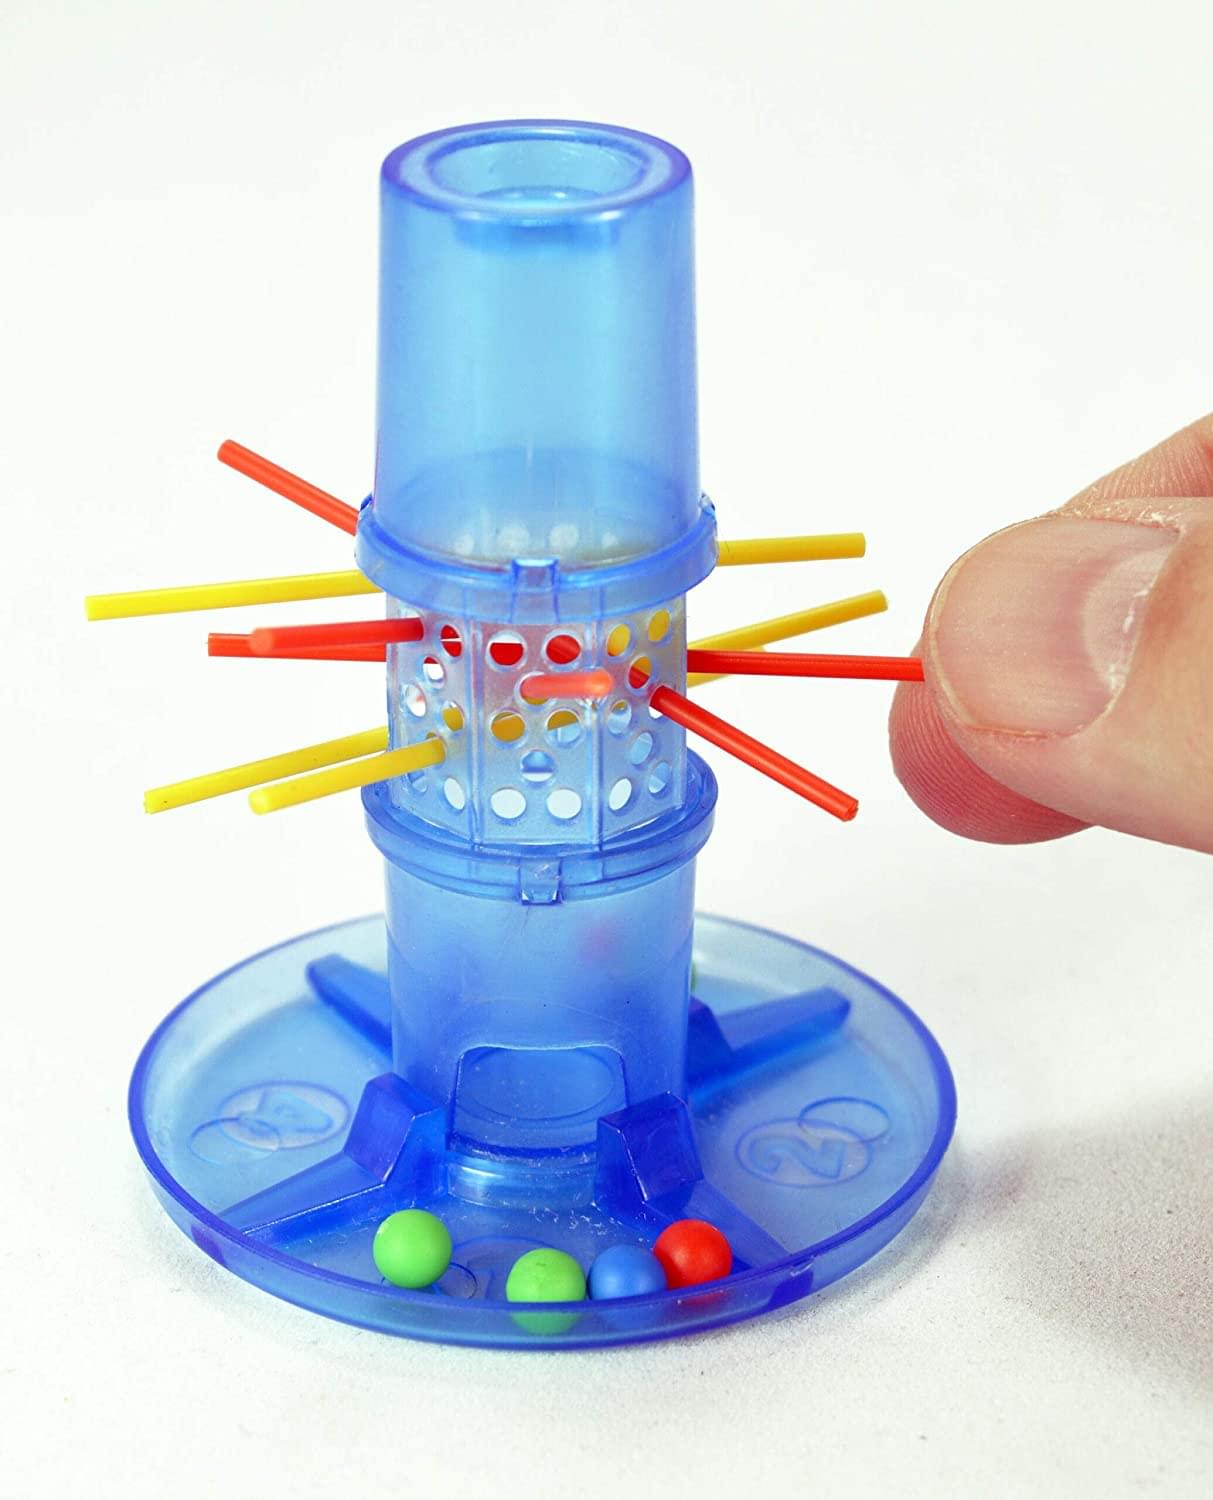 World's Smallest Kerplunk Game